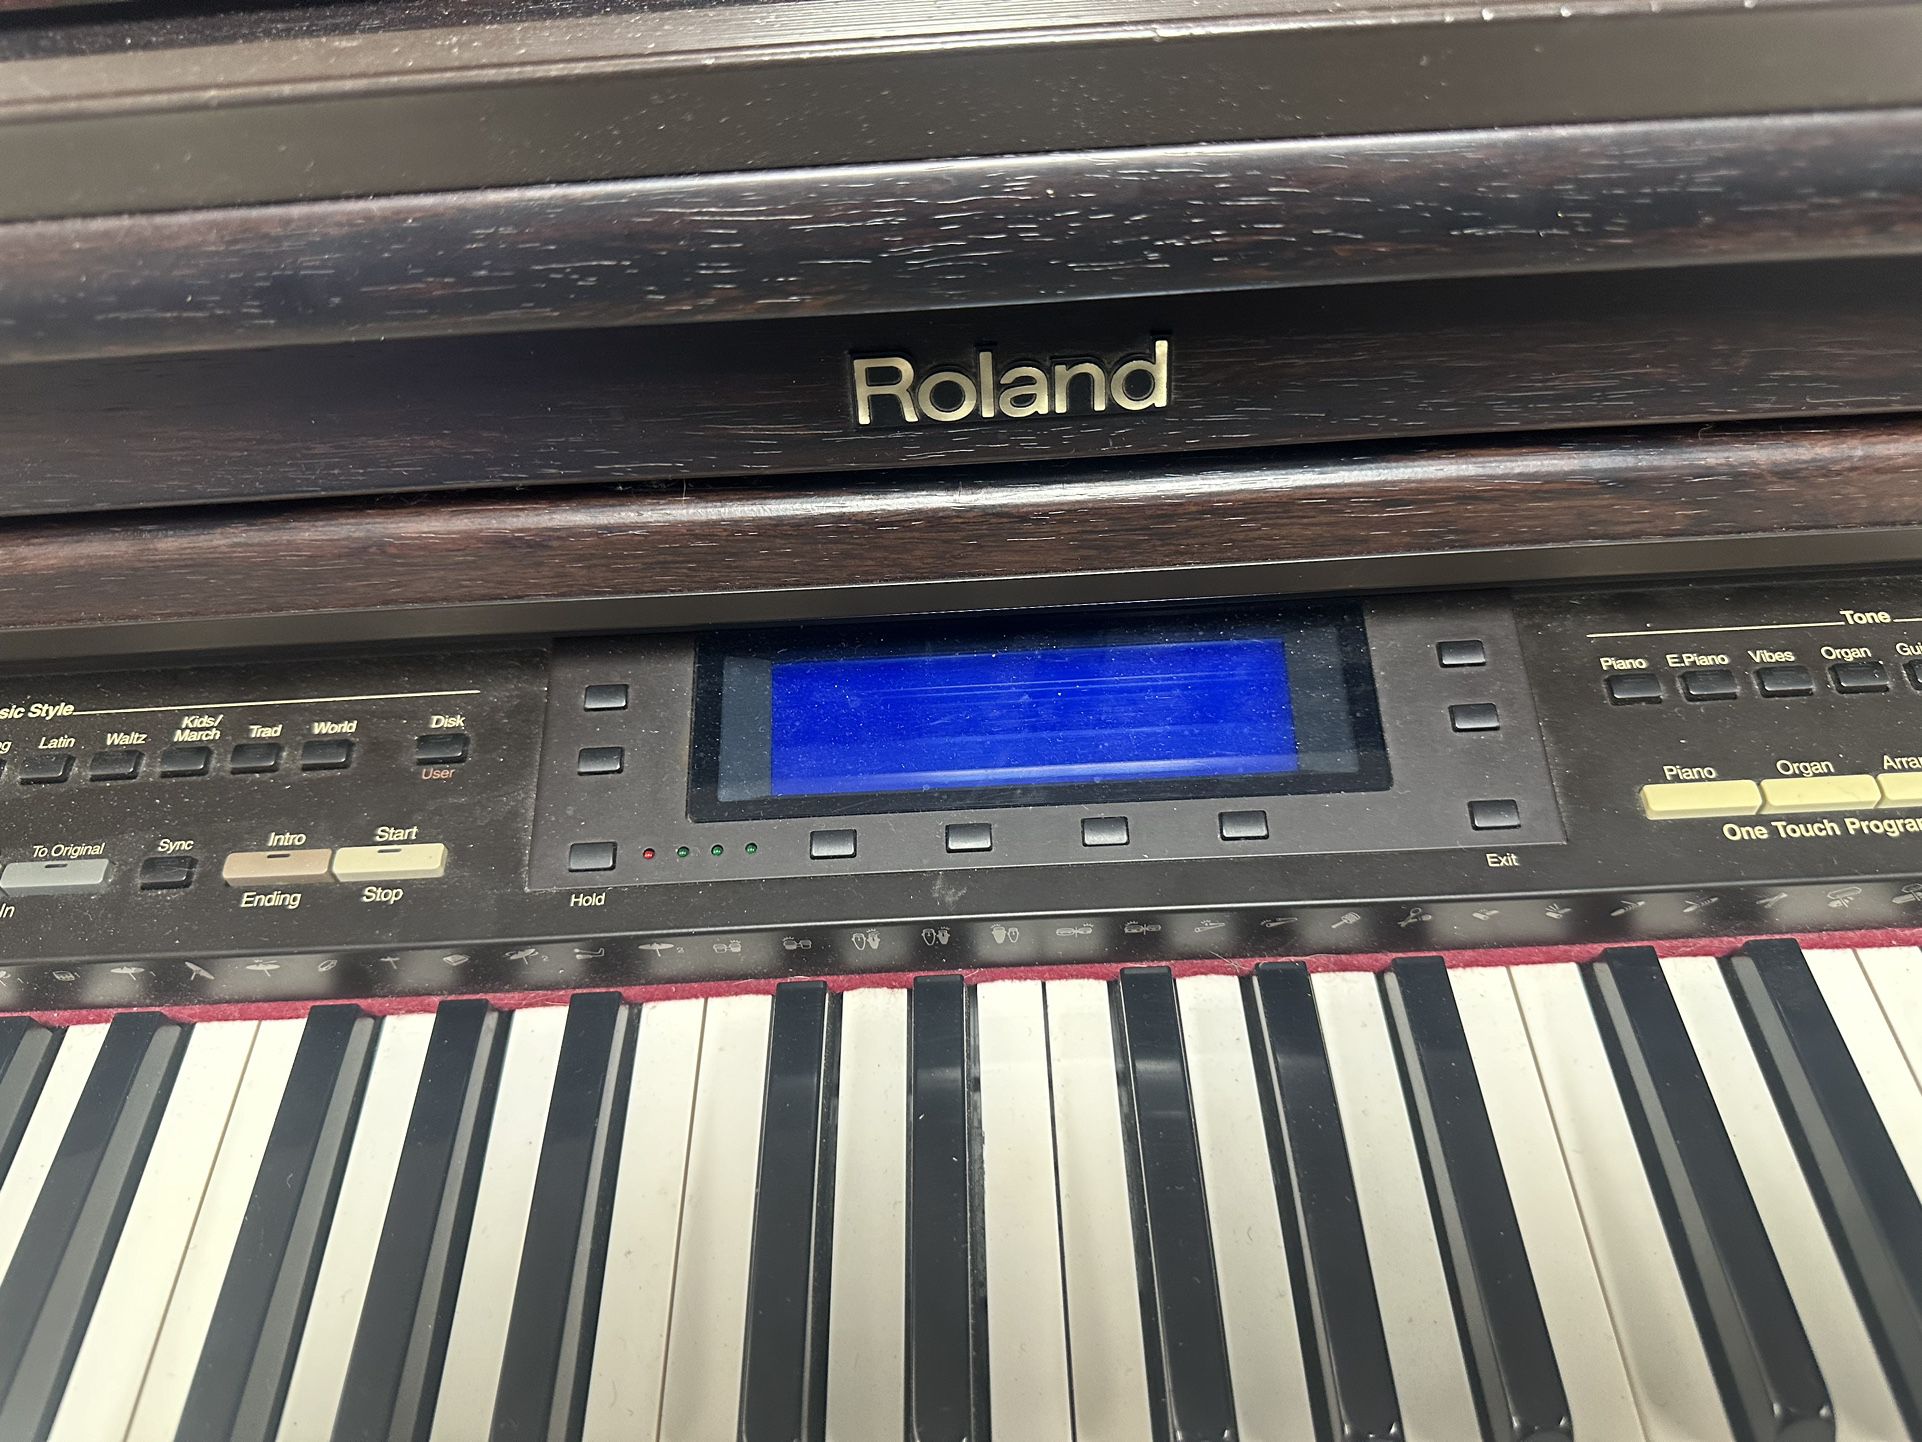 Roland, Keyboard Model KR-570 Good Condition.